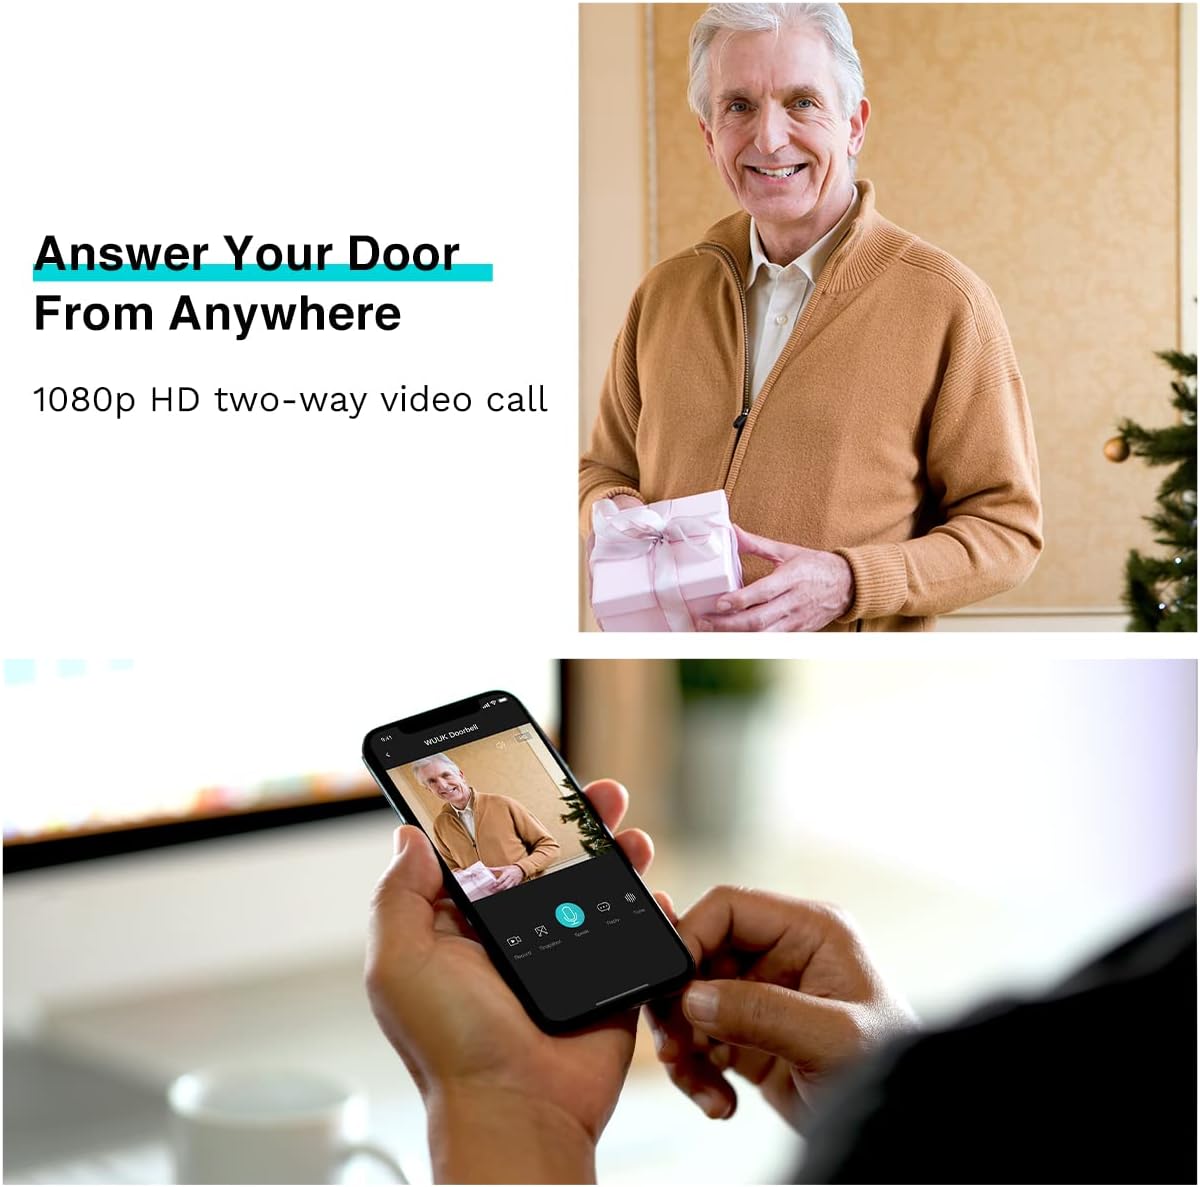 Aosu Wireless Motion Detection Smart Video Doorbell Camera w/ Night Vision